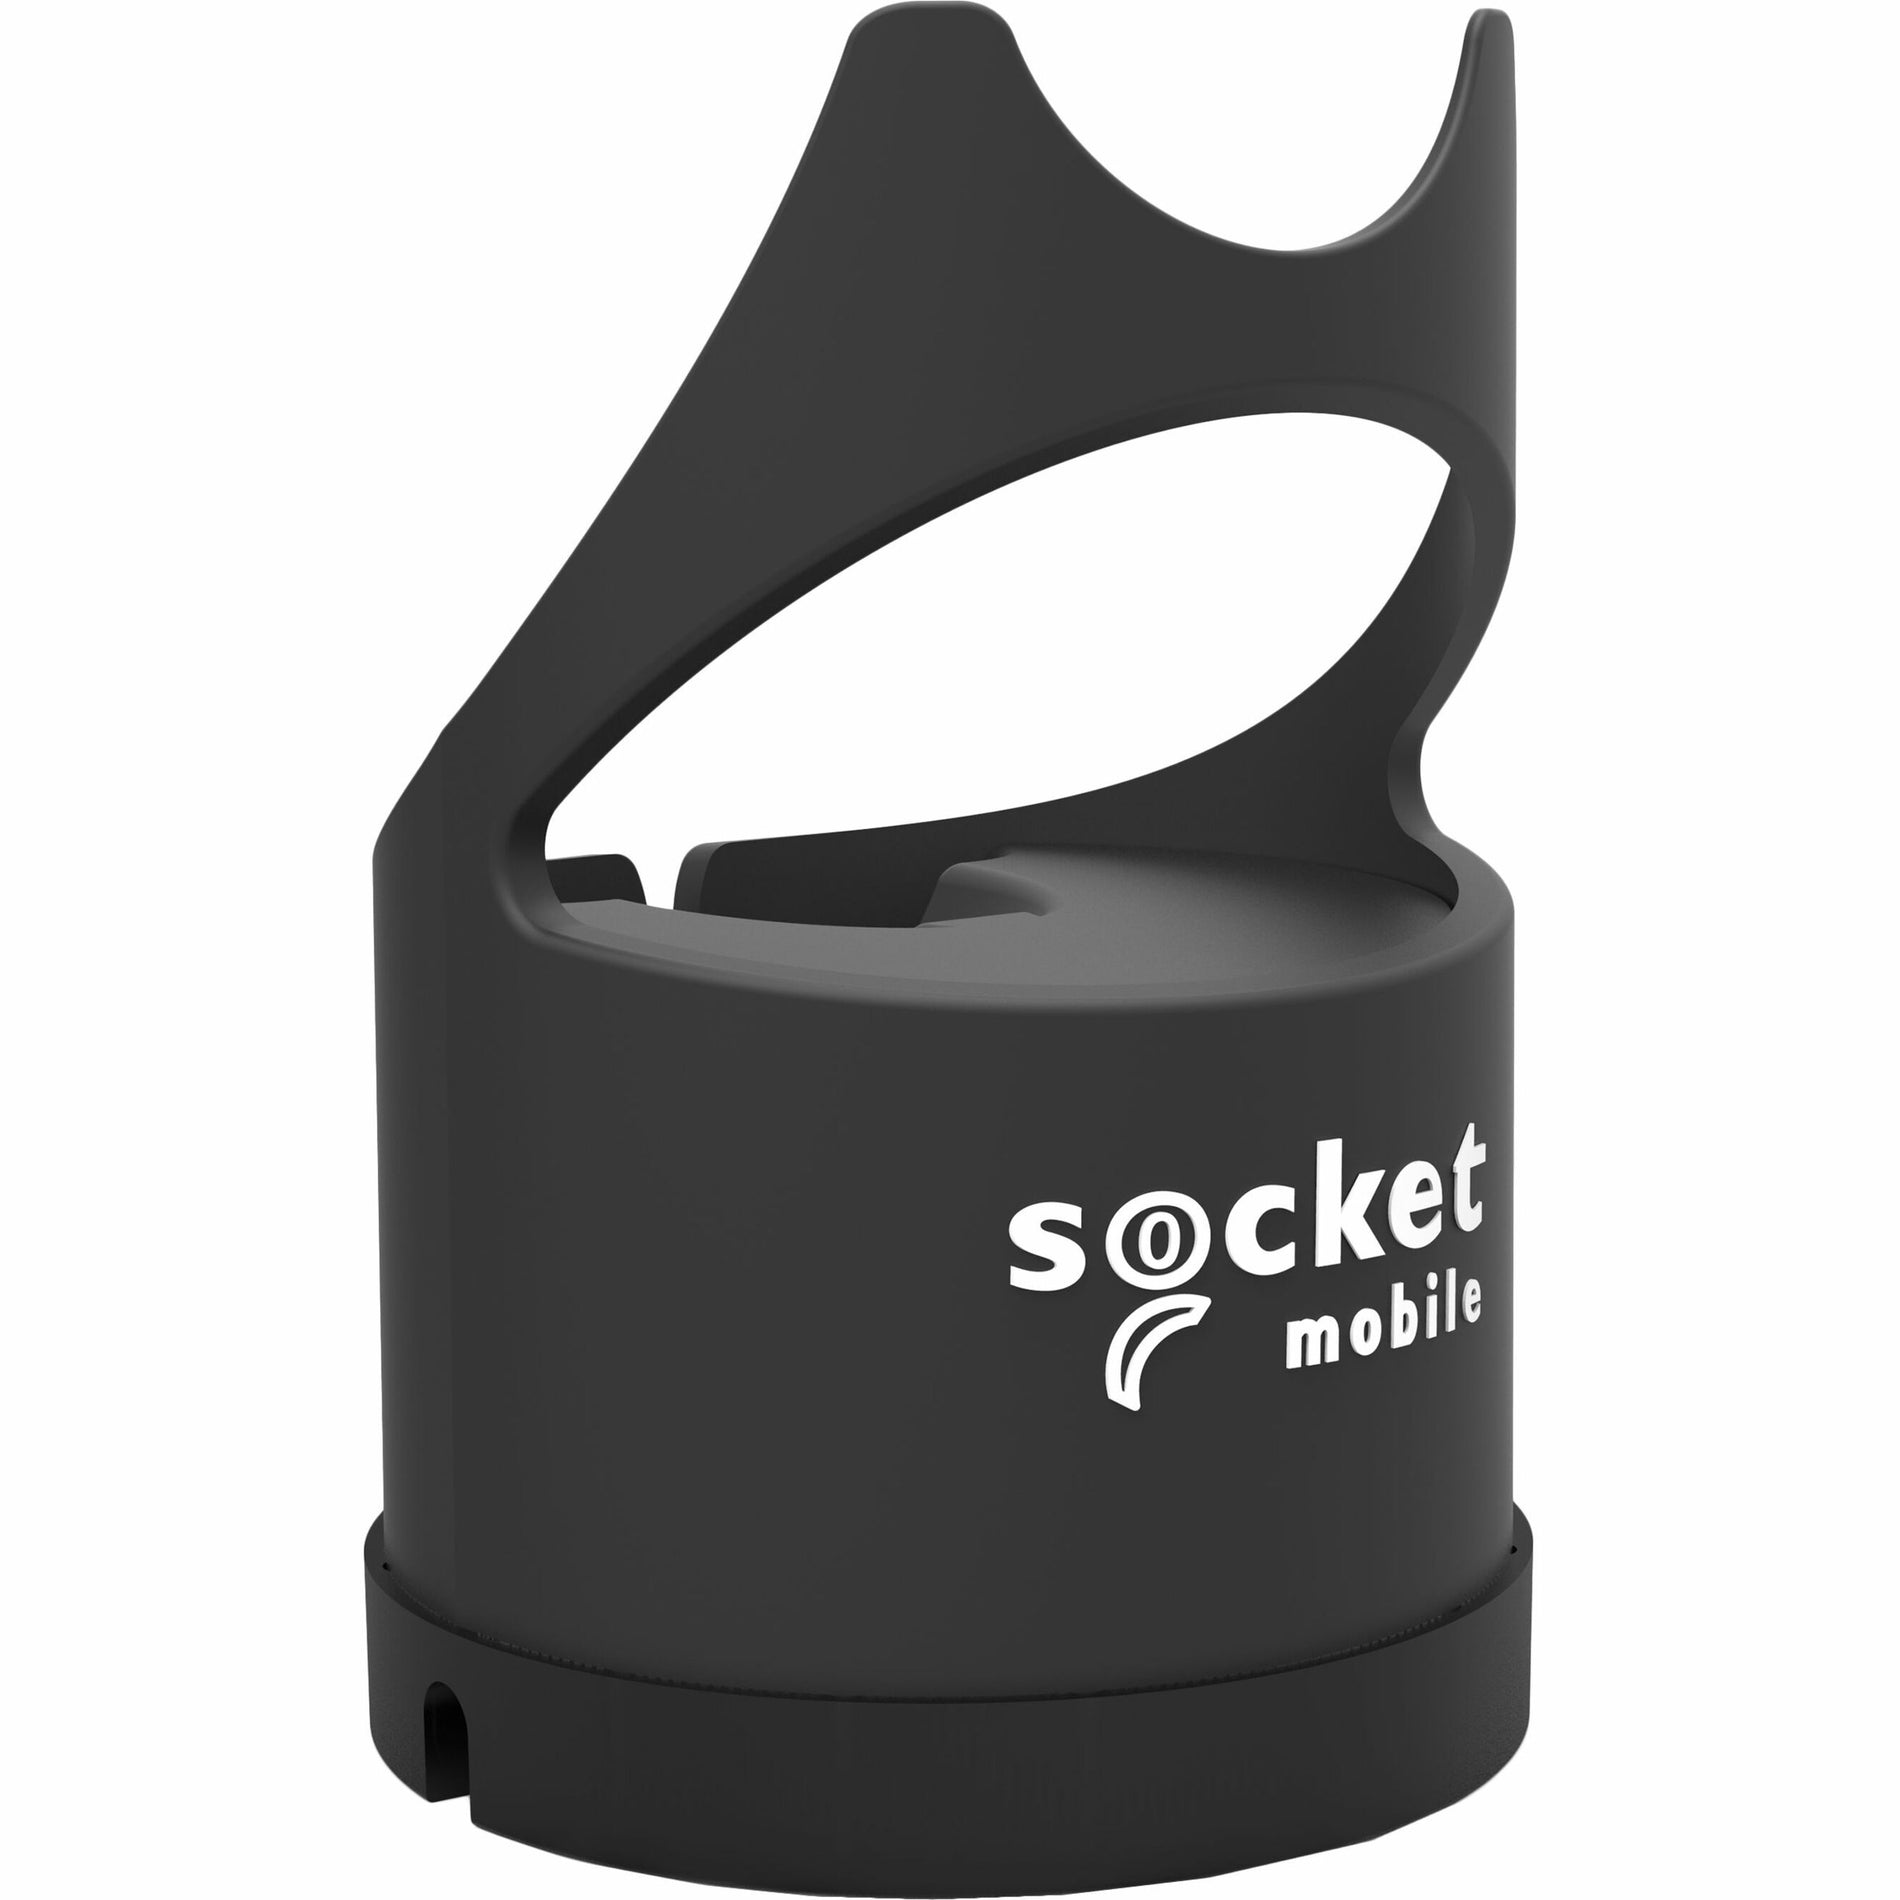 Socket Mobile CX3989-3046 SocketScan S720 Barcode Scanner Kit, Yellow & Black Dock, Wireless, 2D & 1D Scanning